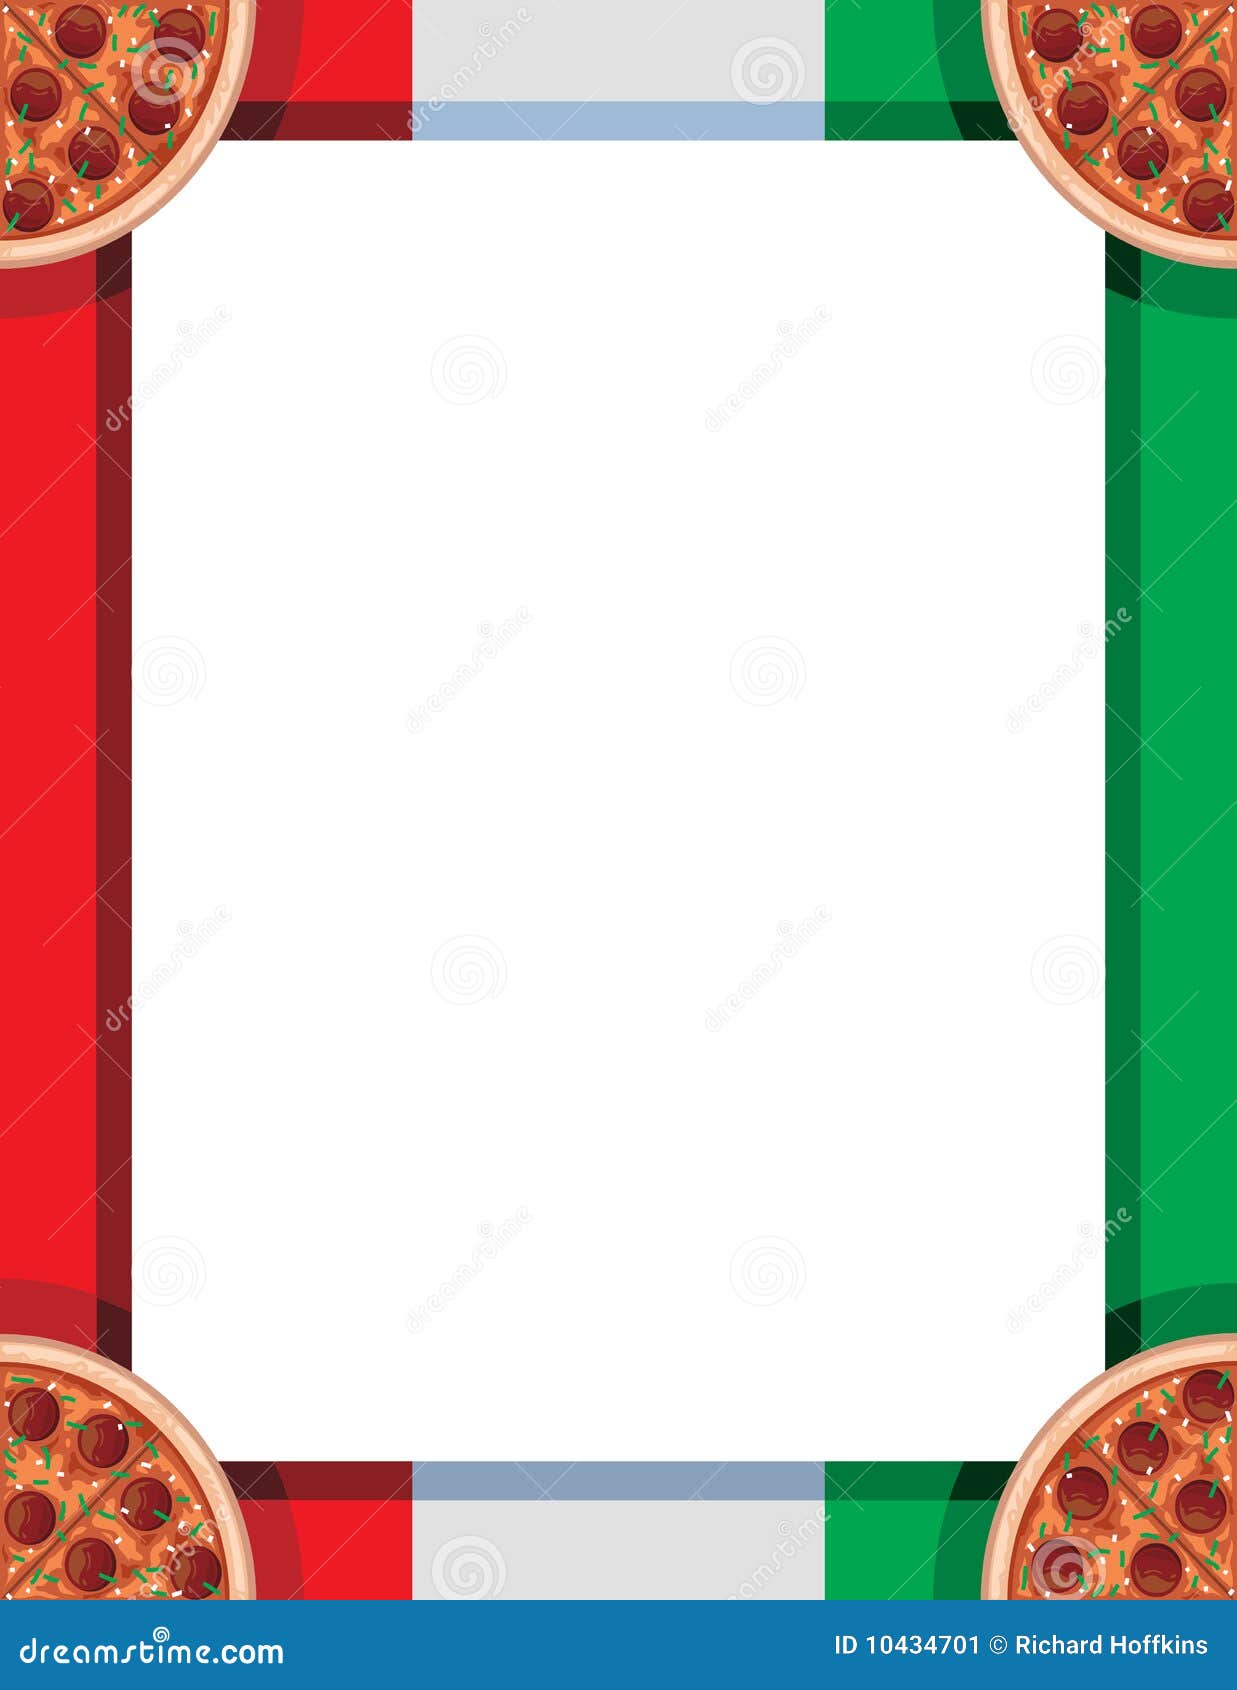 Stock Image: Italian Pizza Border. Image: 10434701